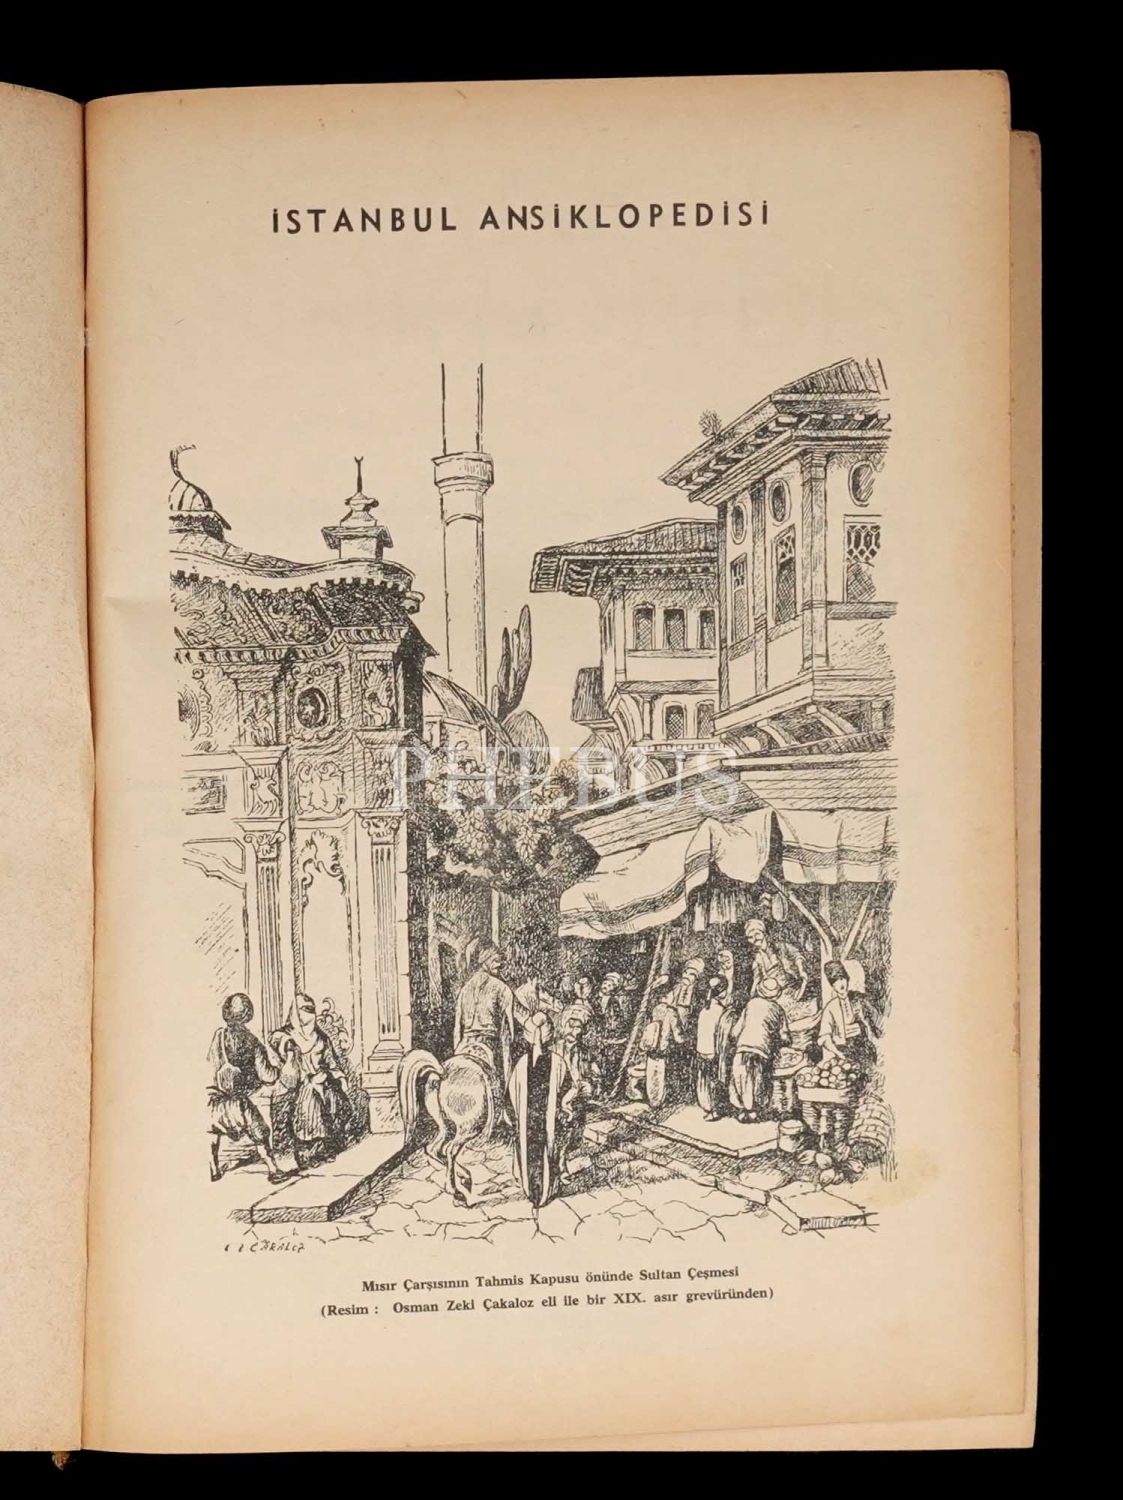 İSTANBUL ANSİKLOPEDİSİ, (6. Cilt)  Reşat Ekrem Koçu, 1963, İstanbul Ansiklopedisi ve Kolektif Neşriyat Şirketi, 573 sayfa, 22x29 cm...